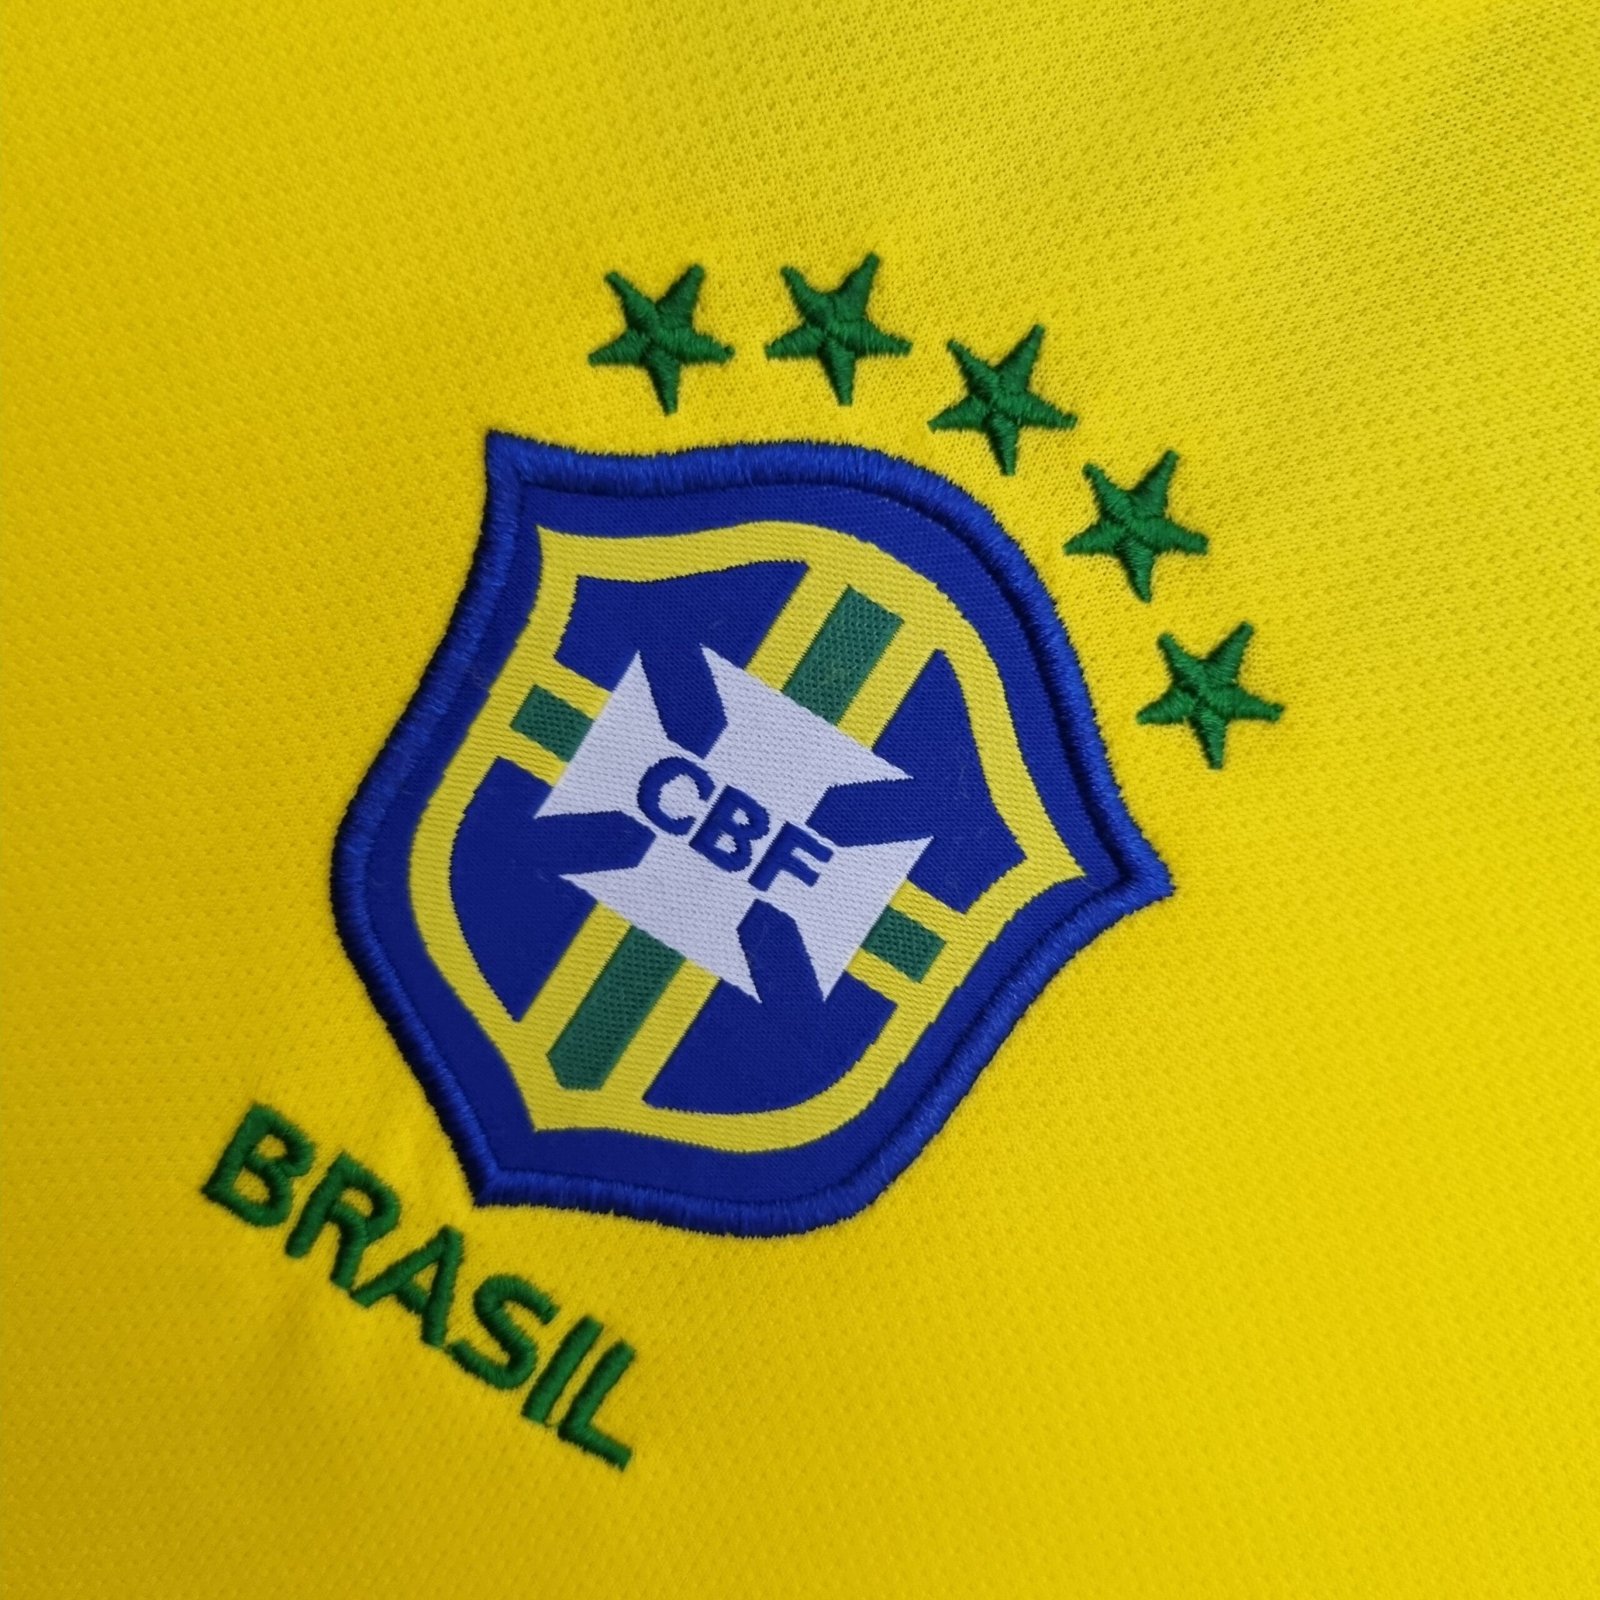 Camiseta Brasil CBF Retro Clásica 2004